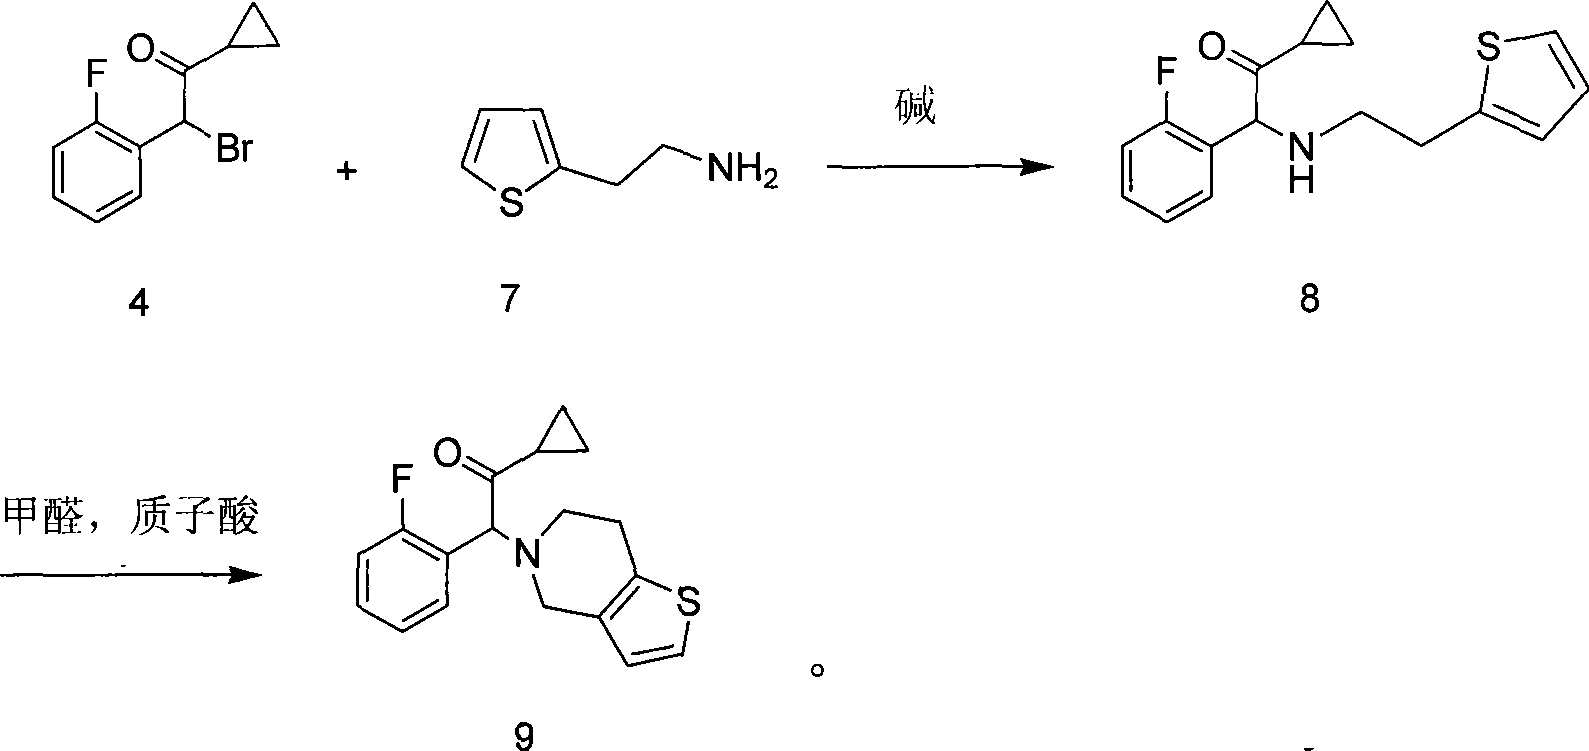 Method for synthesizing prasugrel intermediate and method for synthesizing prasugrel